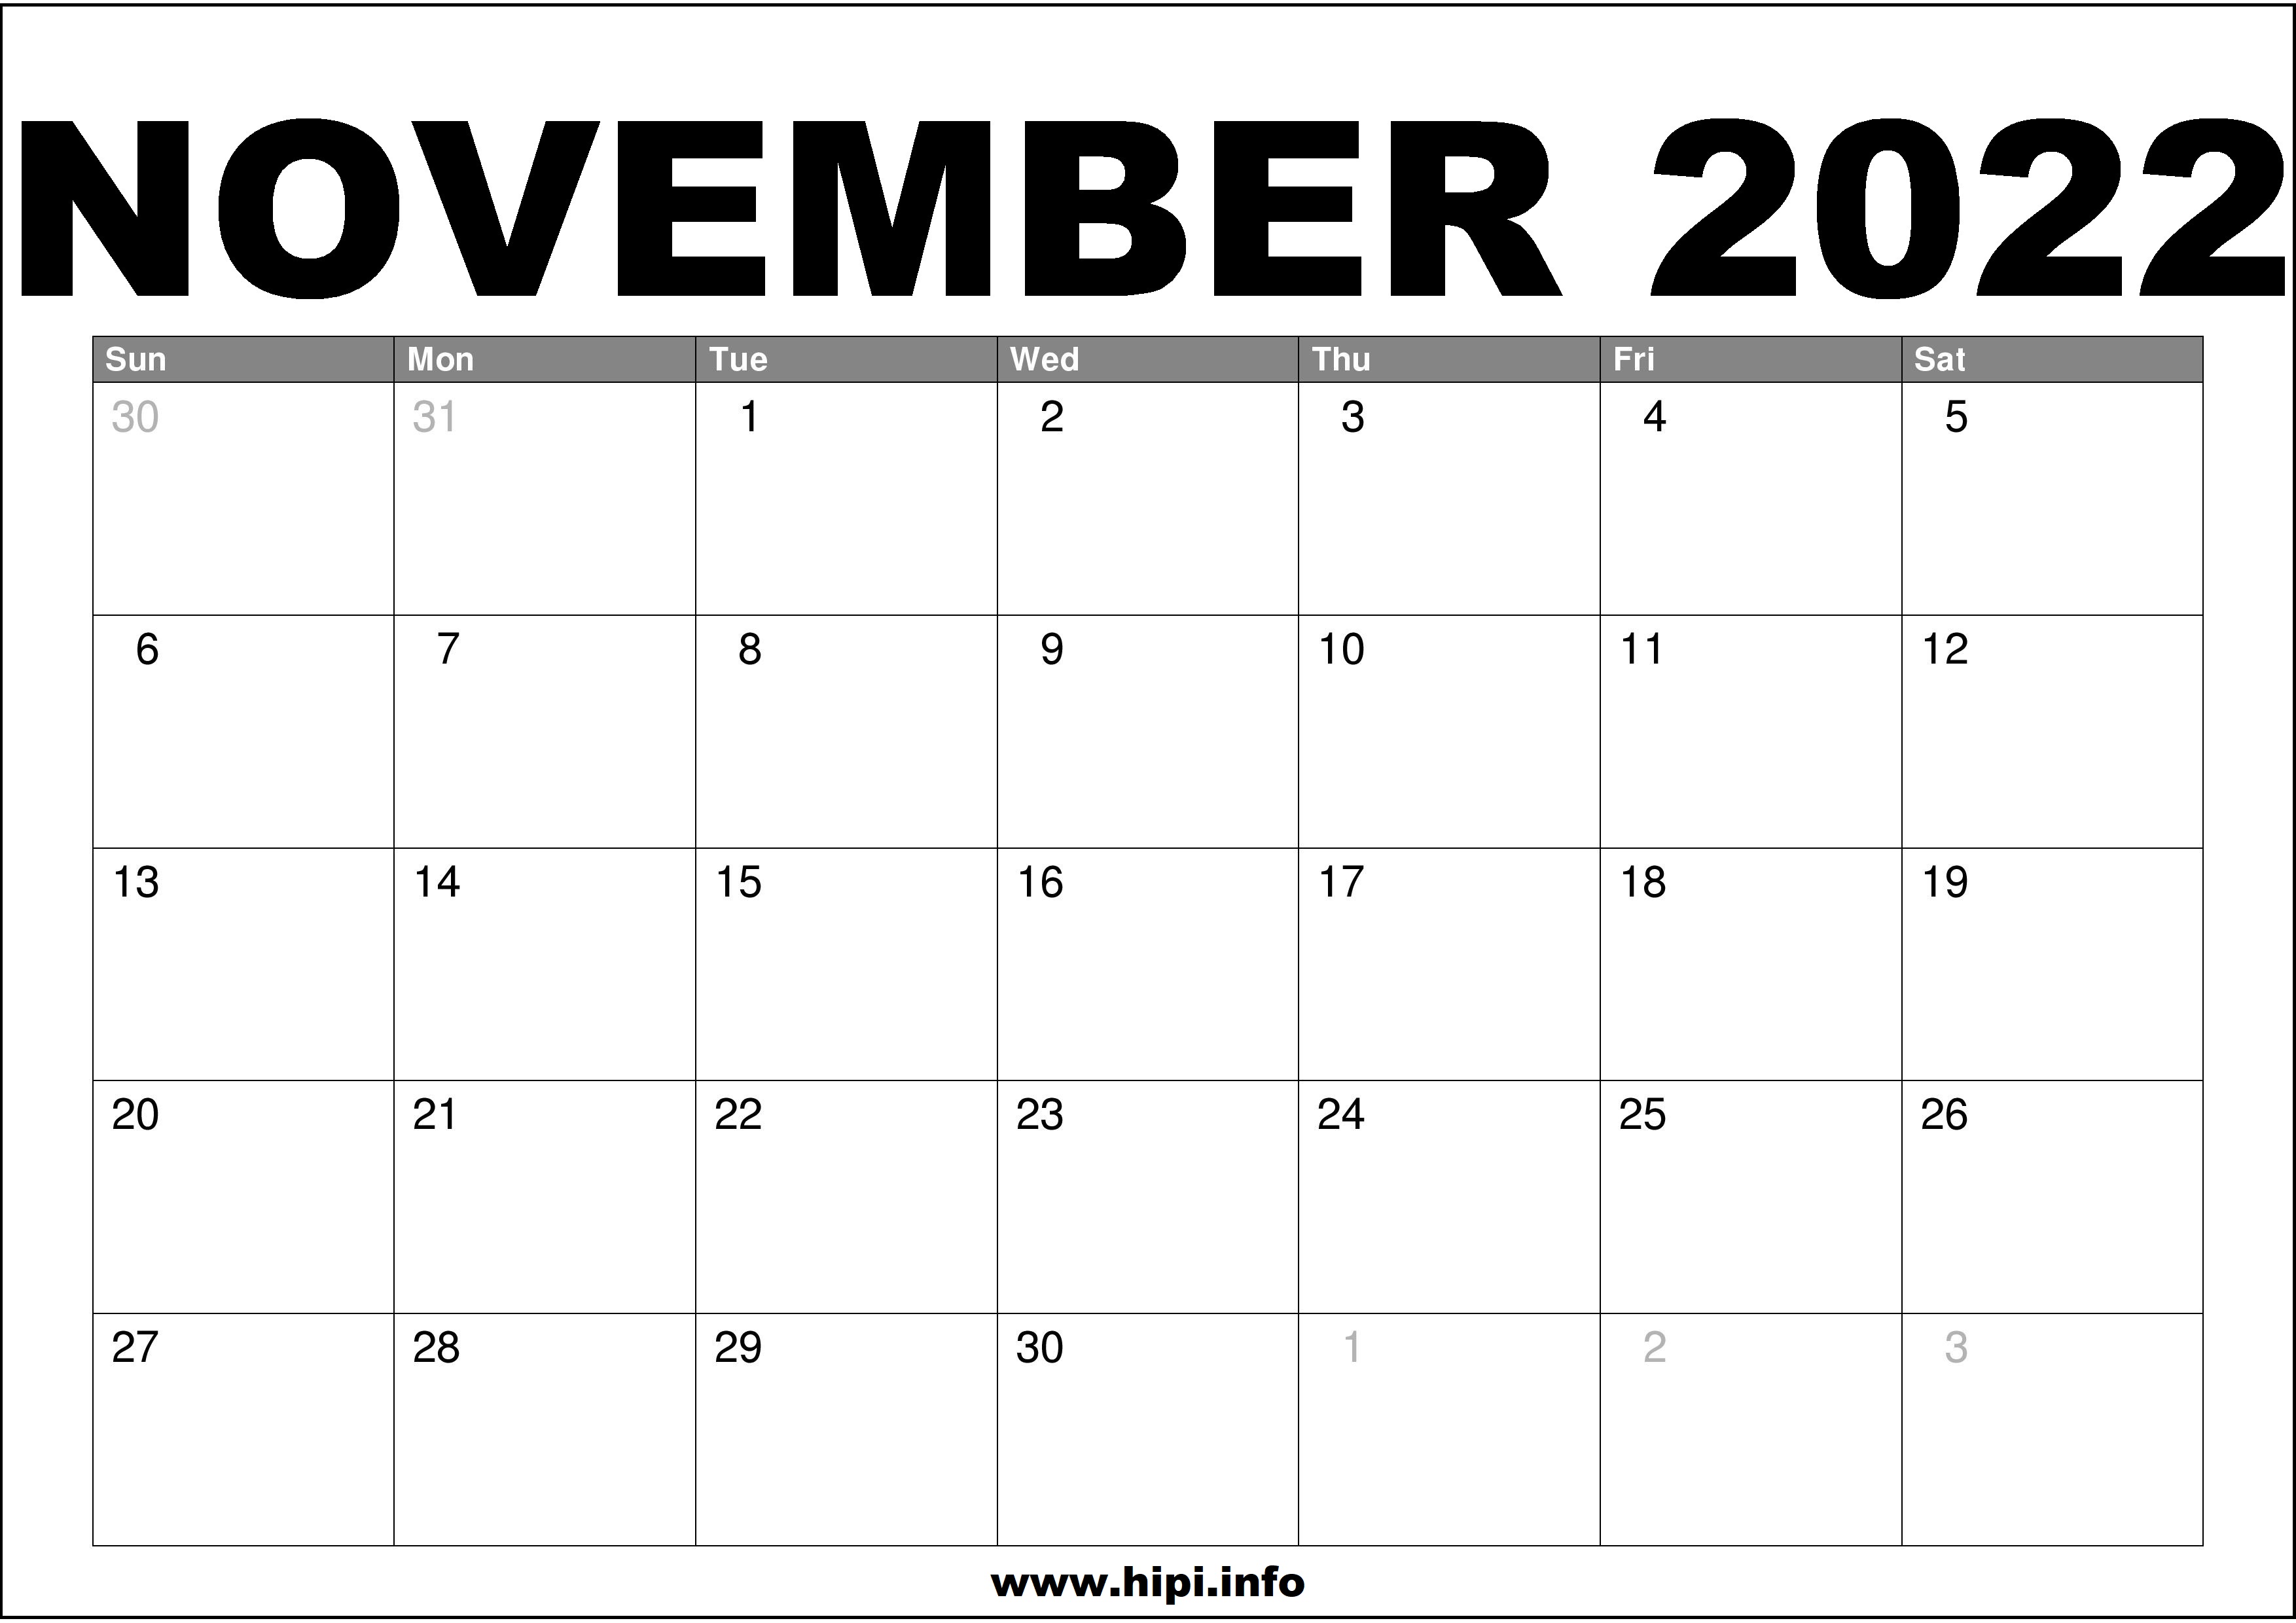 November 2022 Calendar Free Printable November 2022 Calendar Printable Free - Hipi.info | Calendars Printable Free